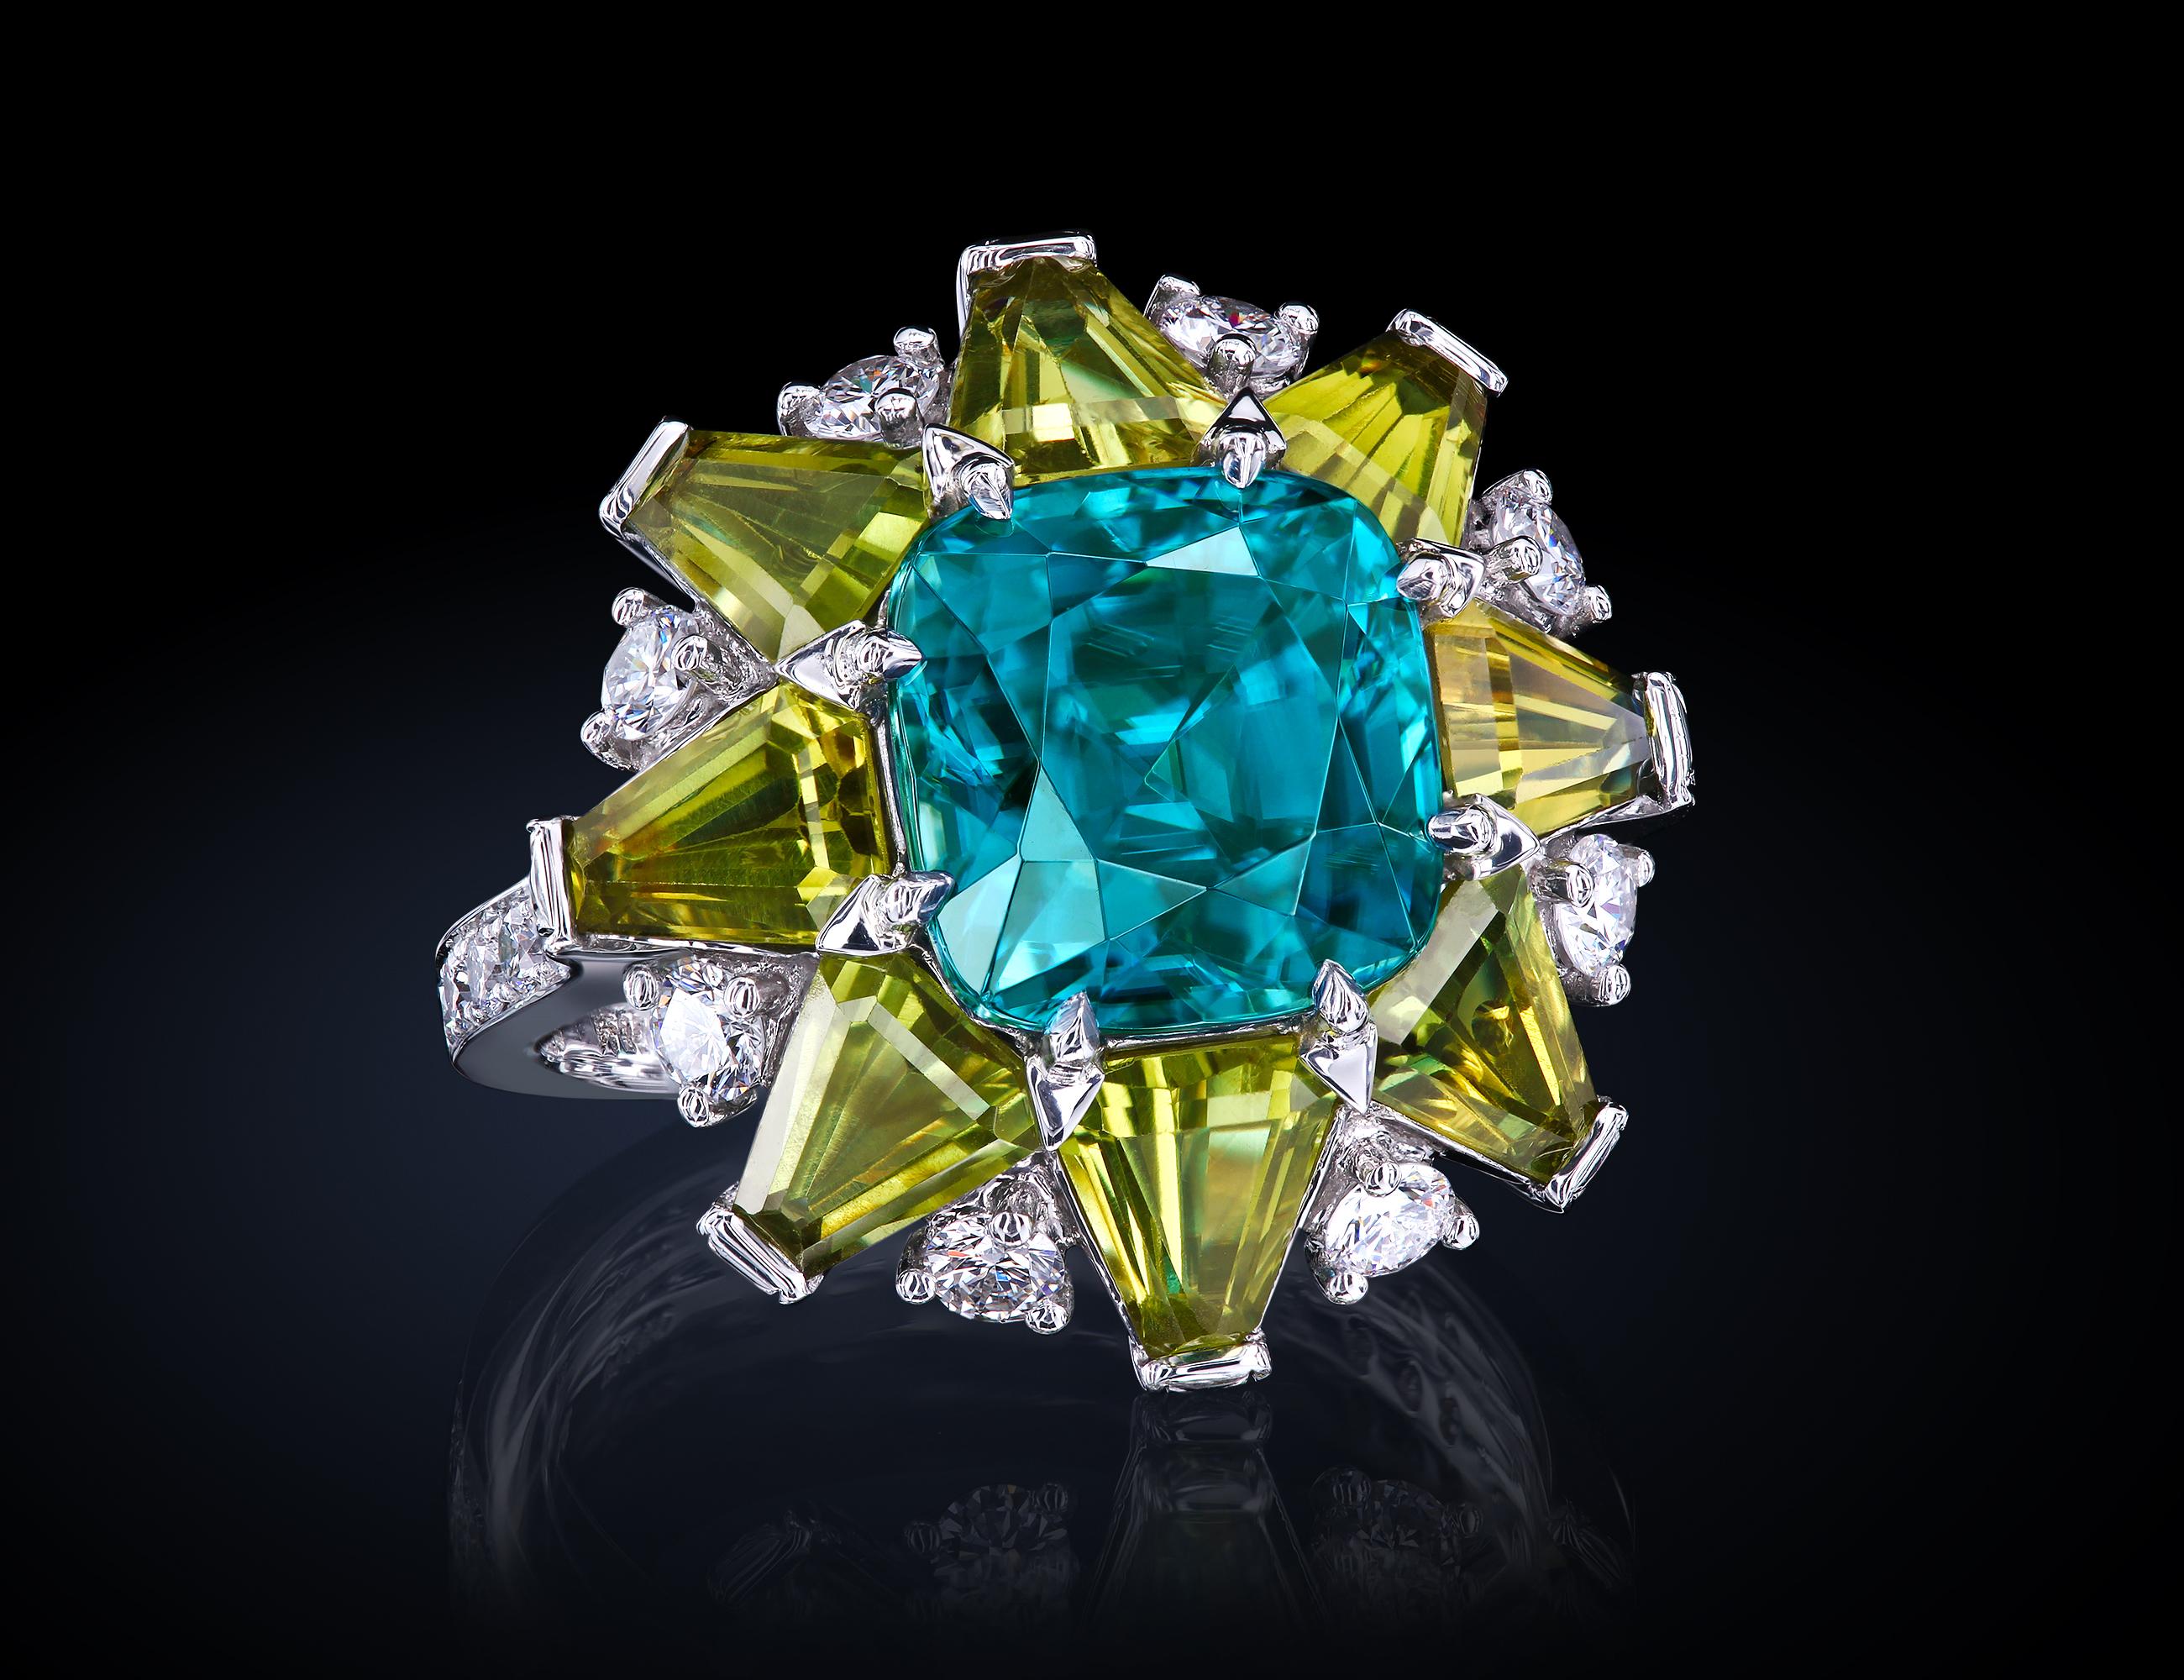 Cushion Cut Leon Mege Avant Garde Paraiba-Like Blue Zircon Fancy Sapphire Diamond Ring 